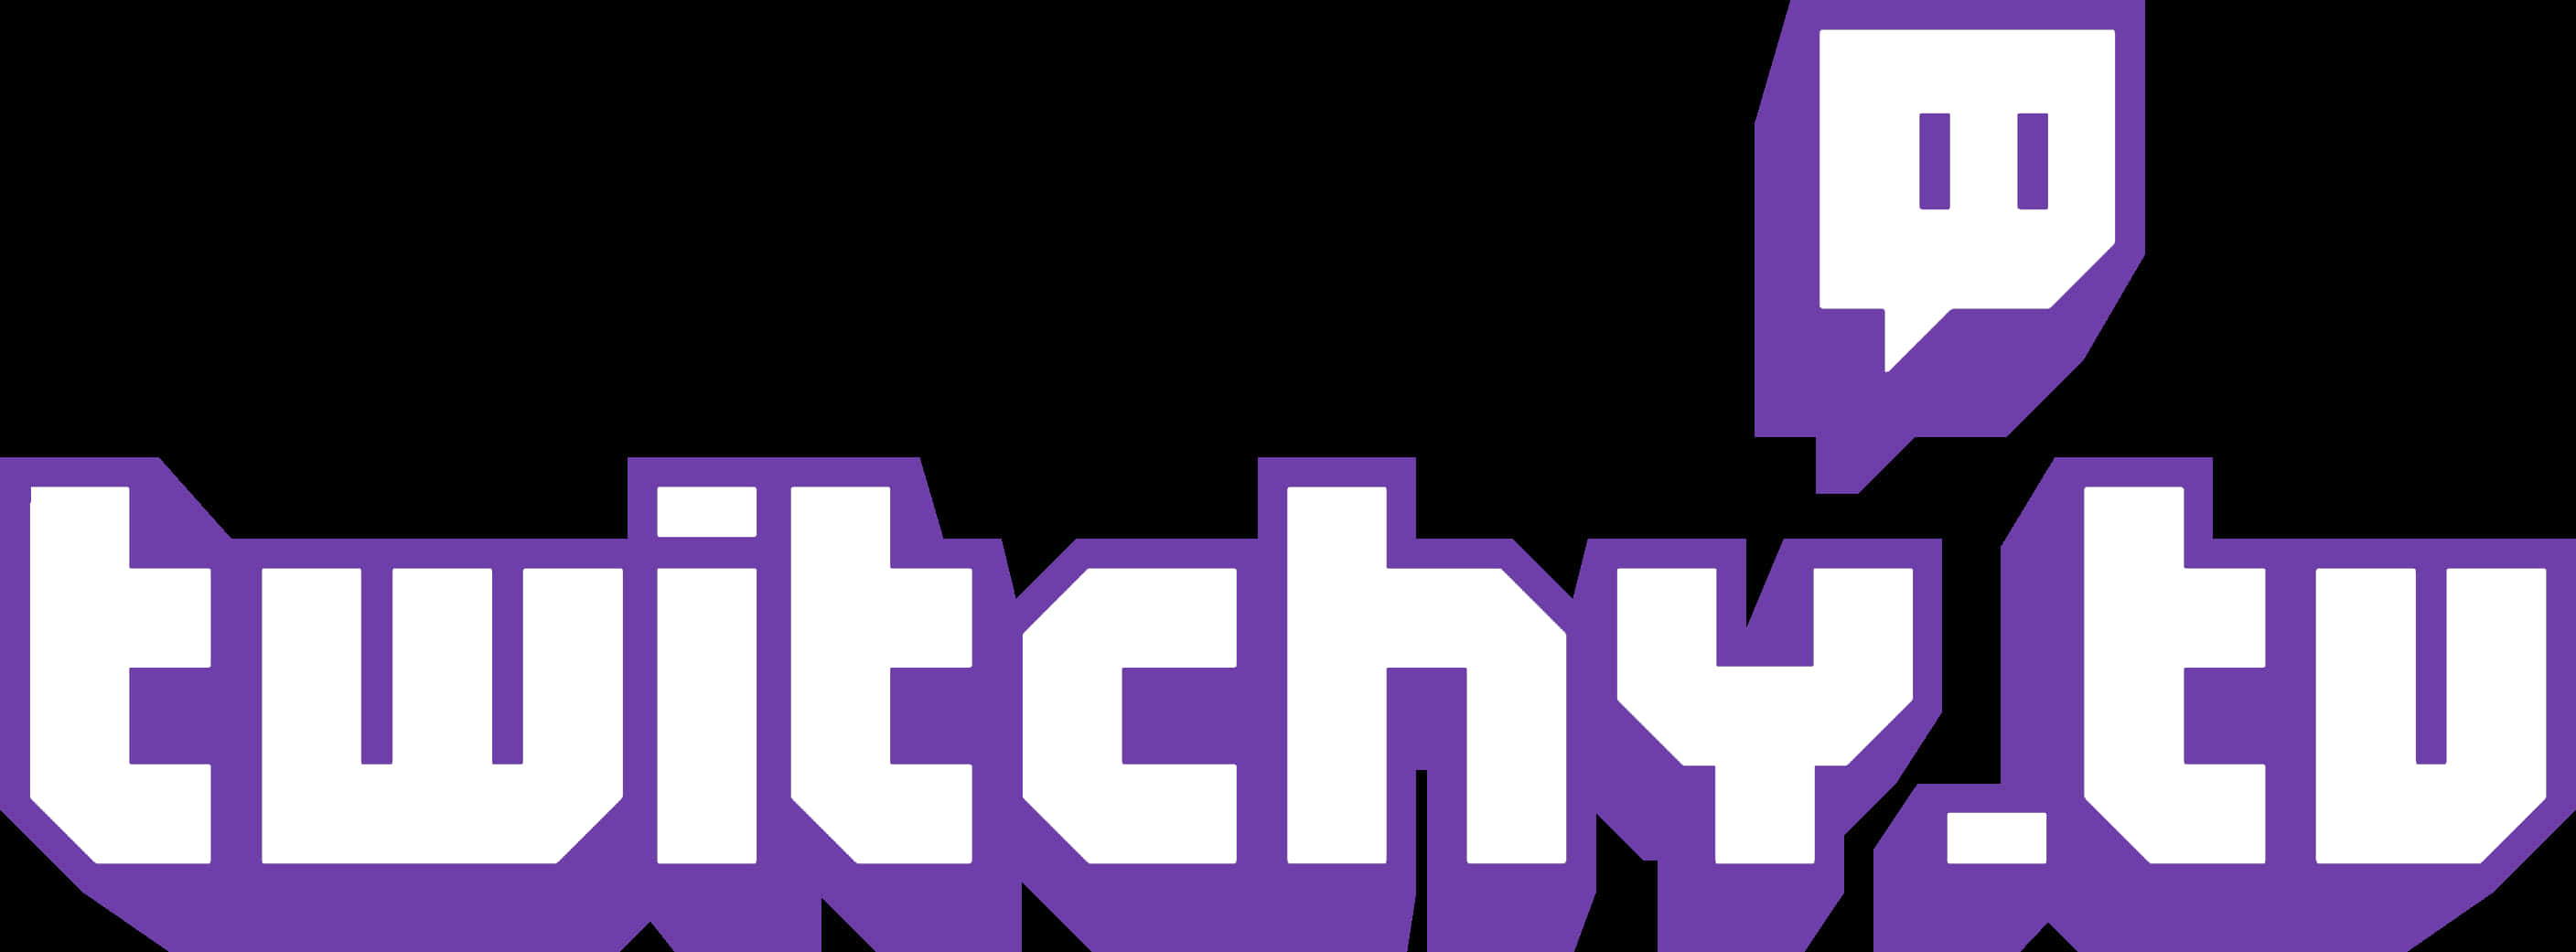 Twitch Logo Png 2816 X 1041